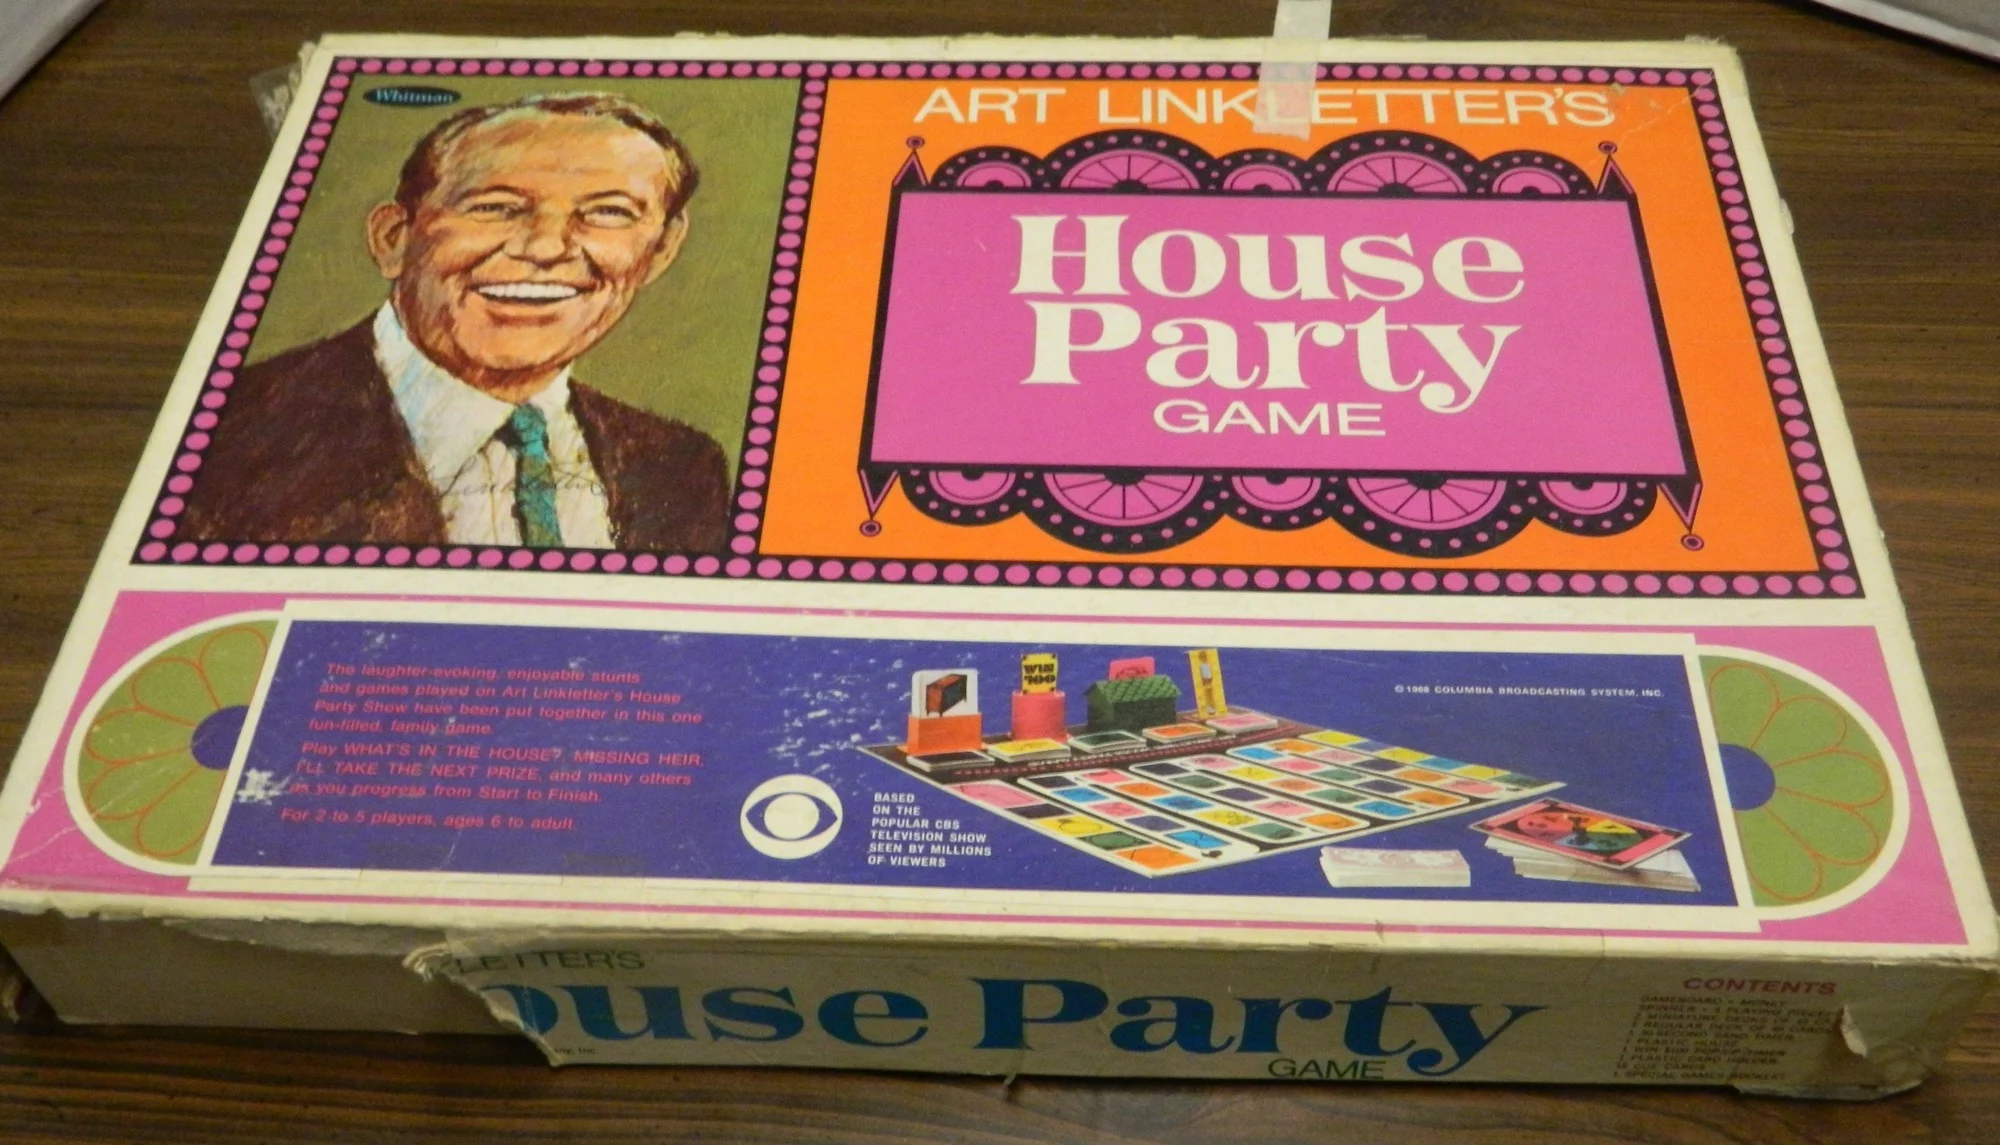 Box for Art Linkletter's House Party